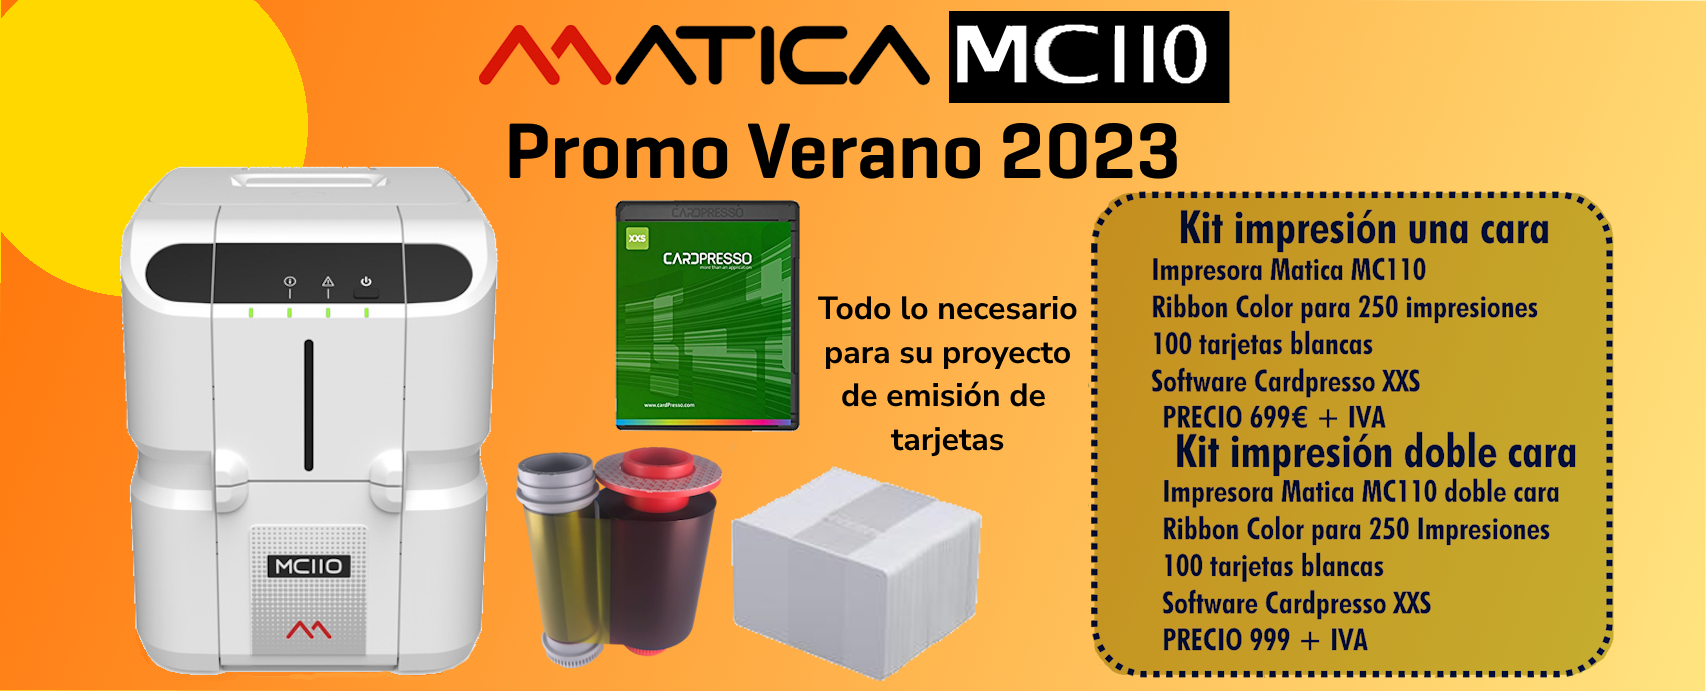 Promo MC110 - OLD_Sipcards: La mejor oferta de Impresoras y tarjetas PVC